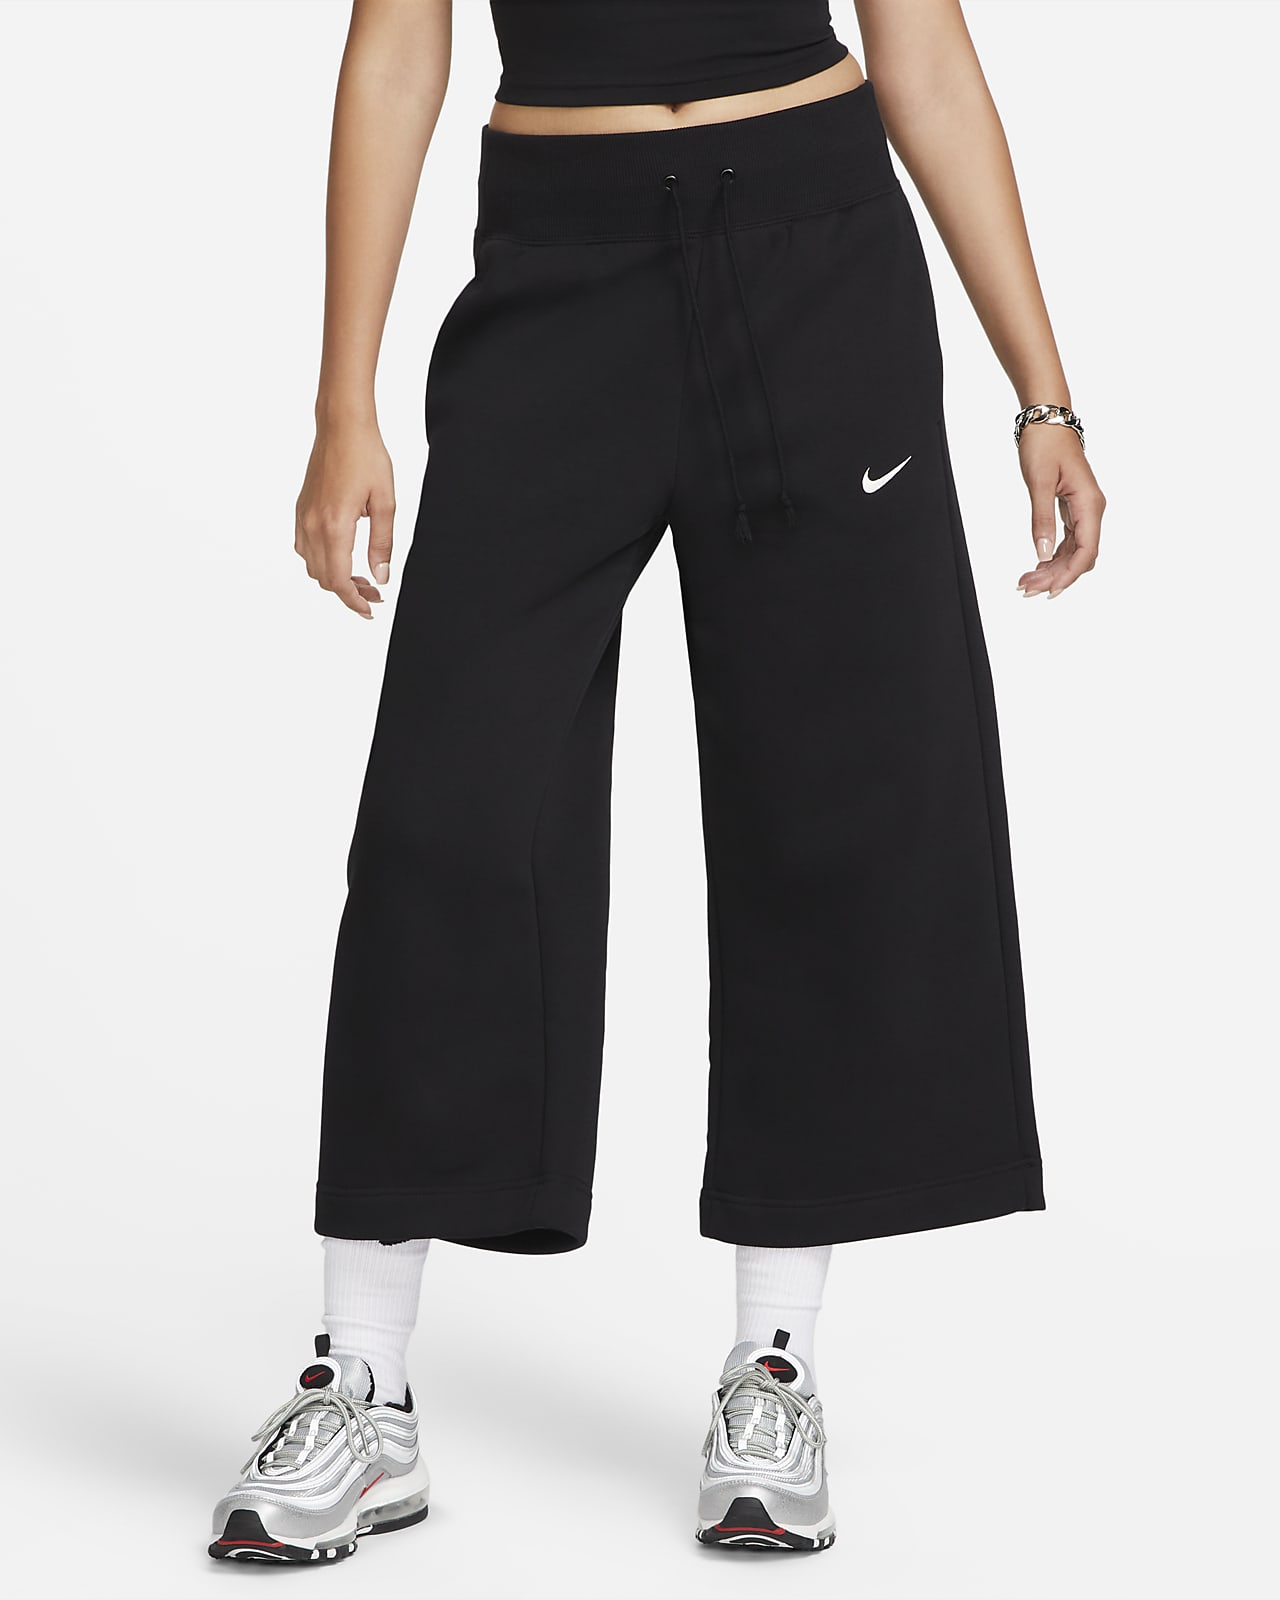 Nike Sportswear Phoenix Fleece Pantalons de xandall de cintura alta i disseny cropped - Dona